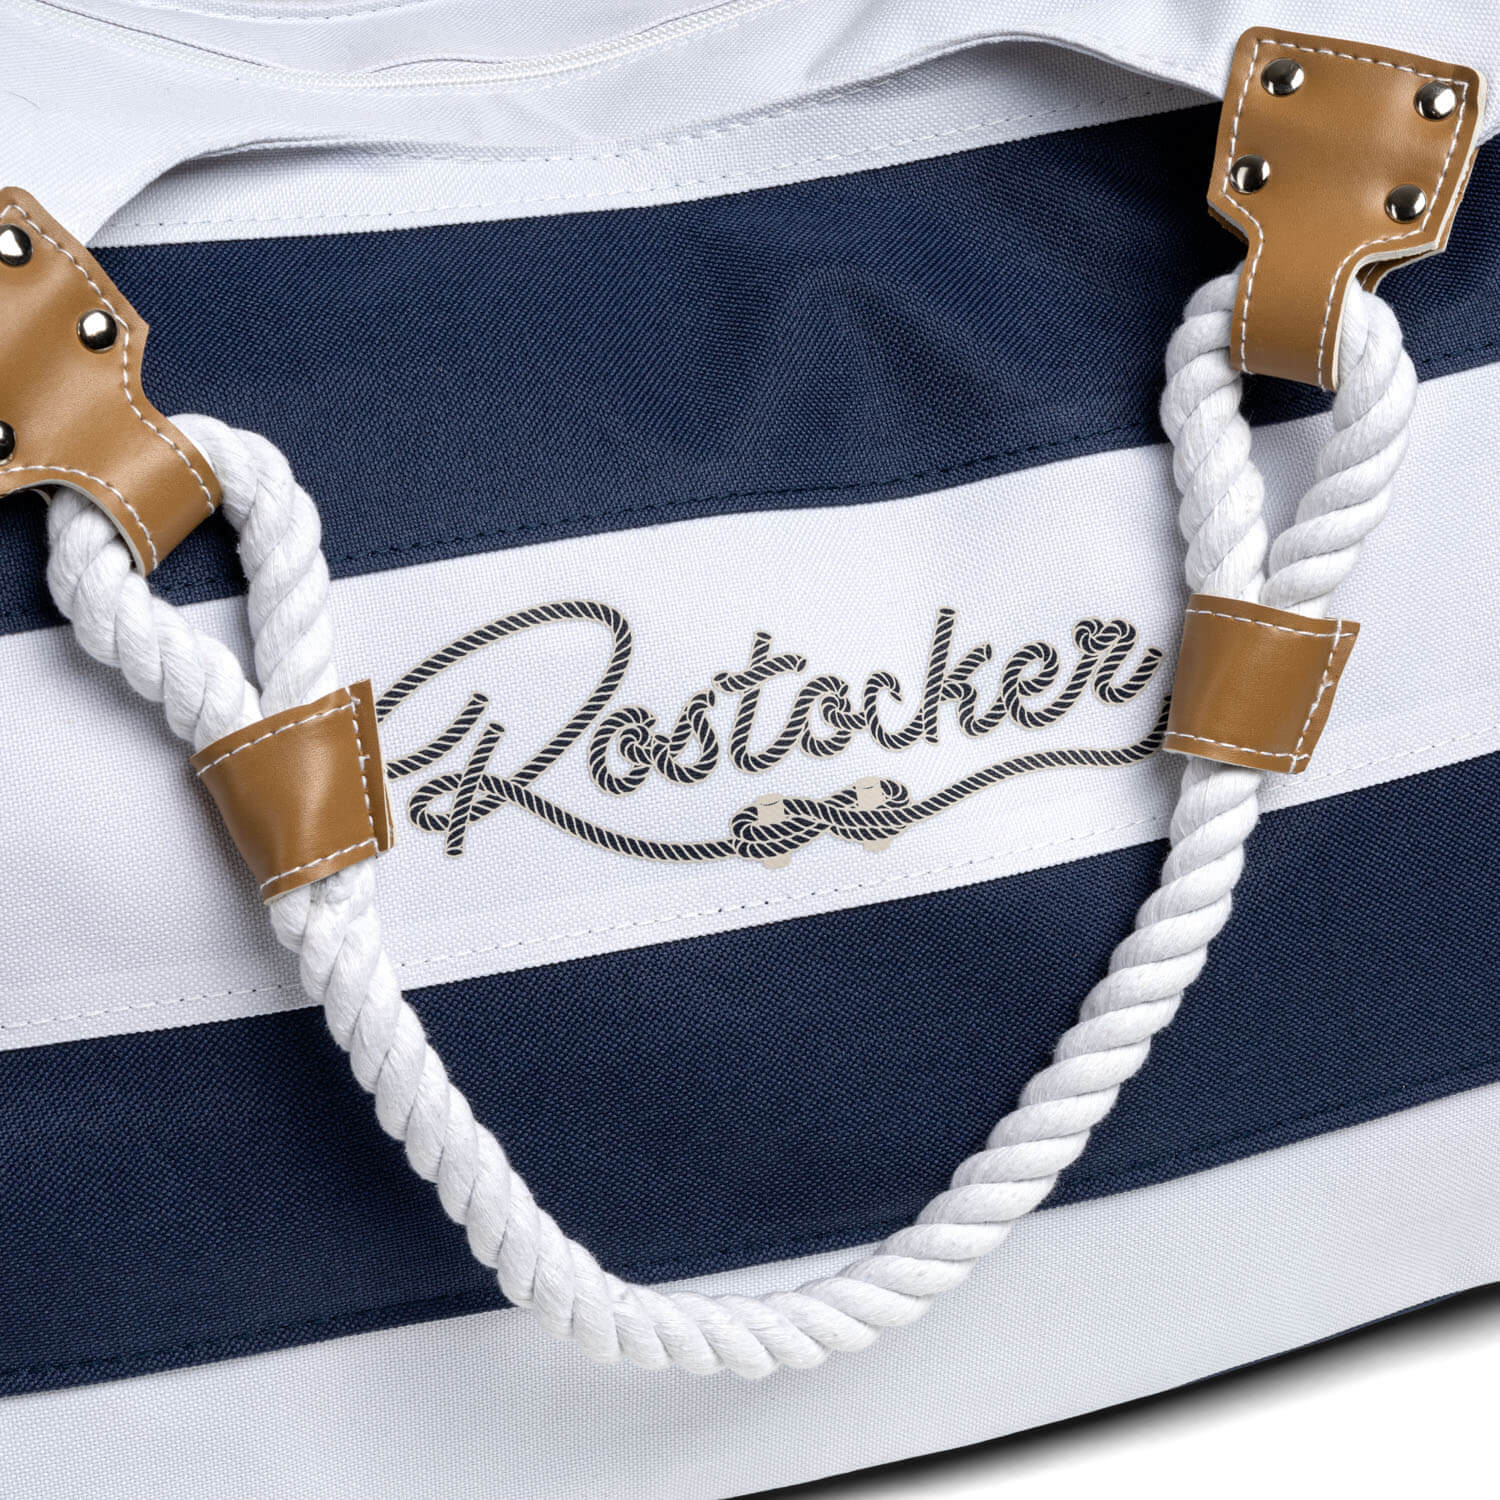 Rostocker Strandtasche